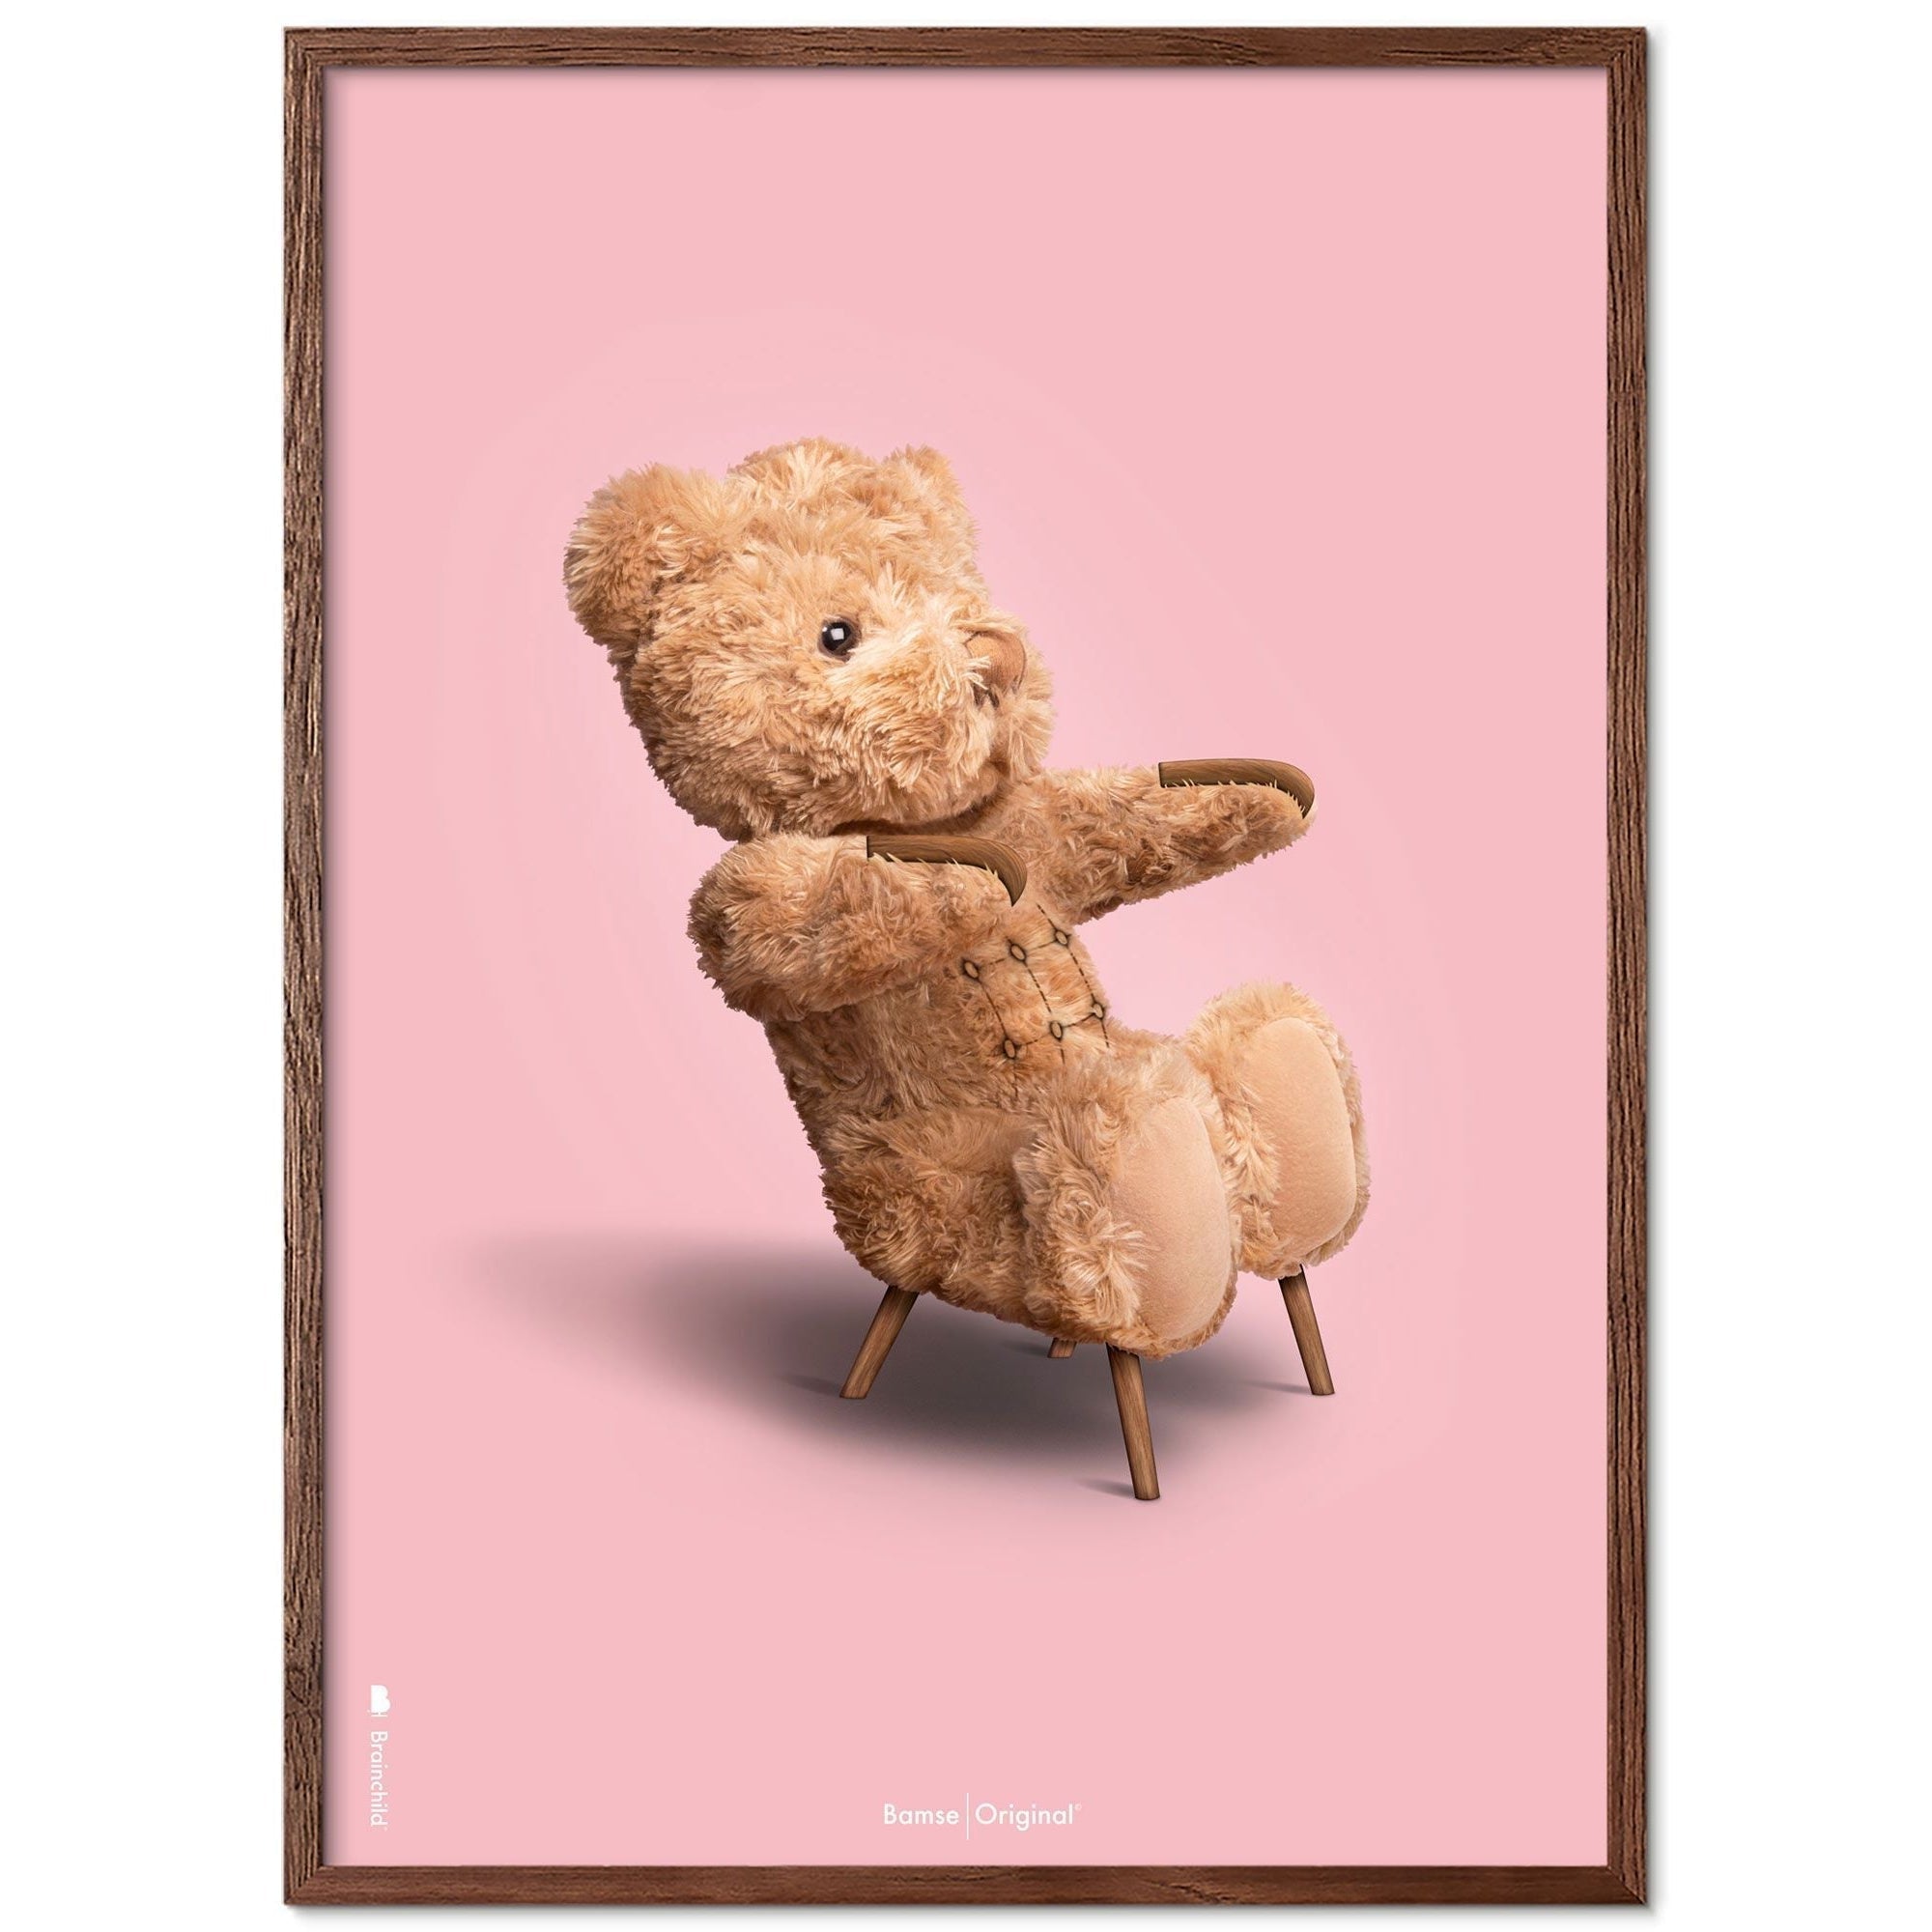 Brainchild Teddybeer klassiek poster frame gemaakt van donker hout ram 70x100 cm, roze achtergrond